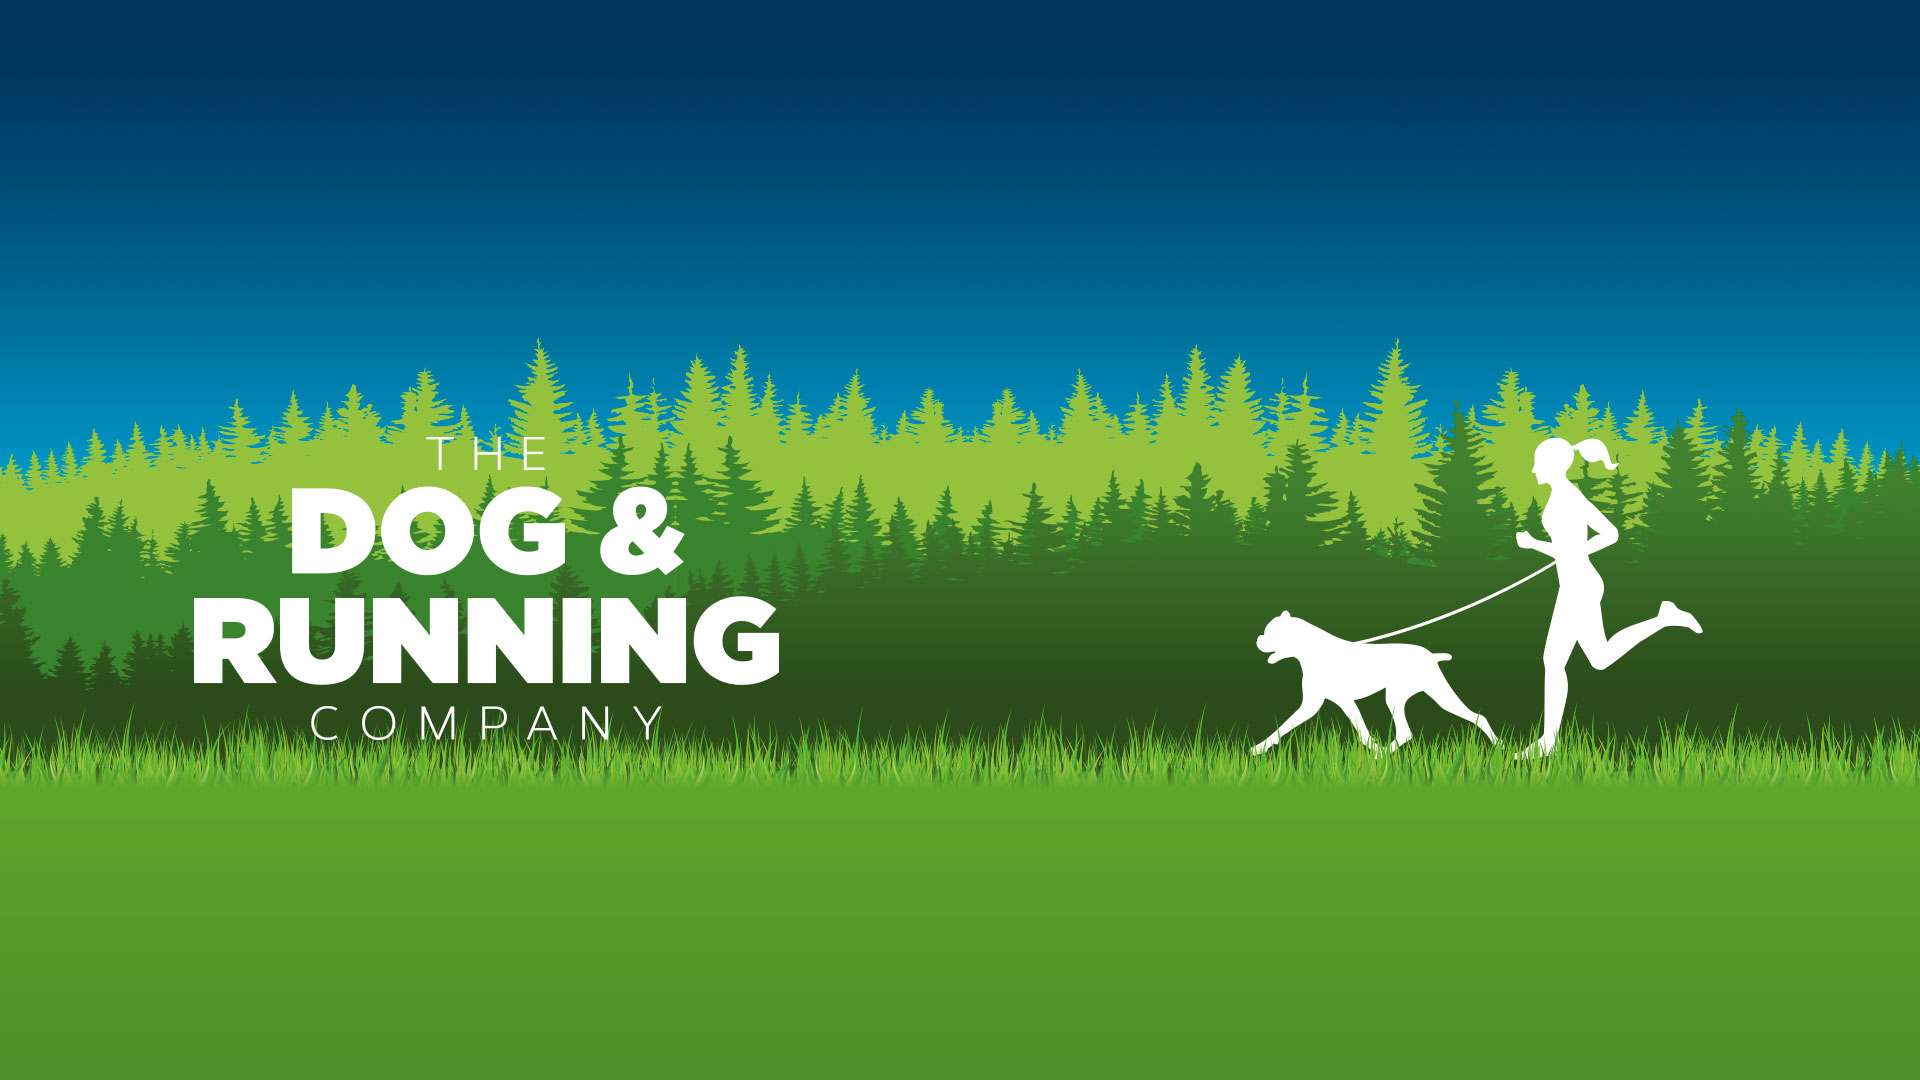 The Dog & Running Company